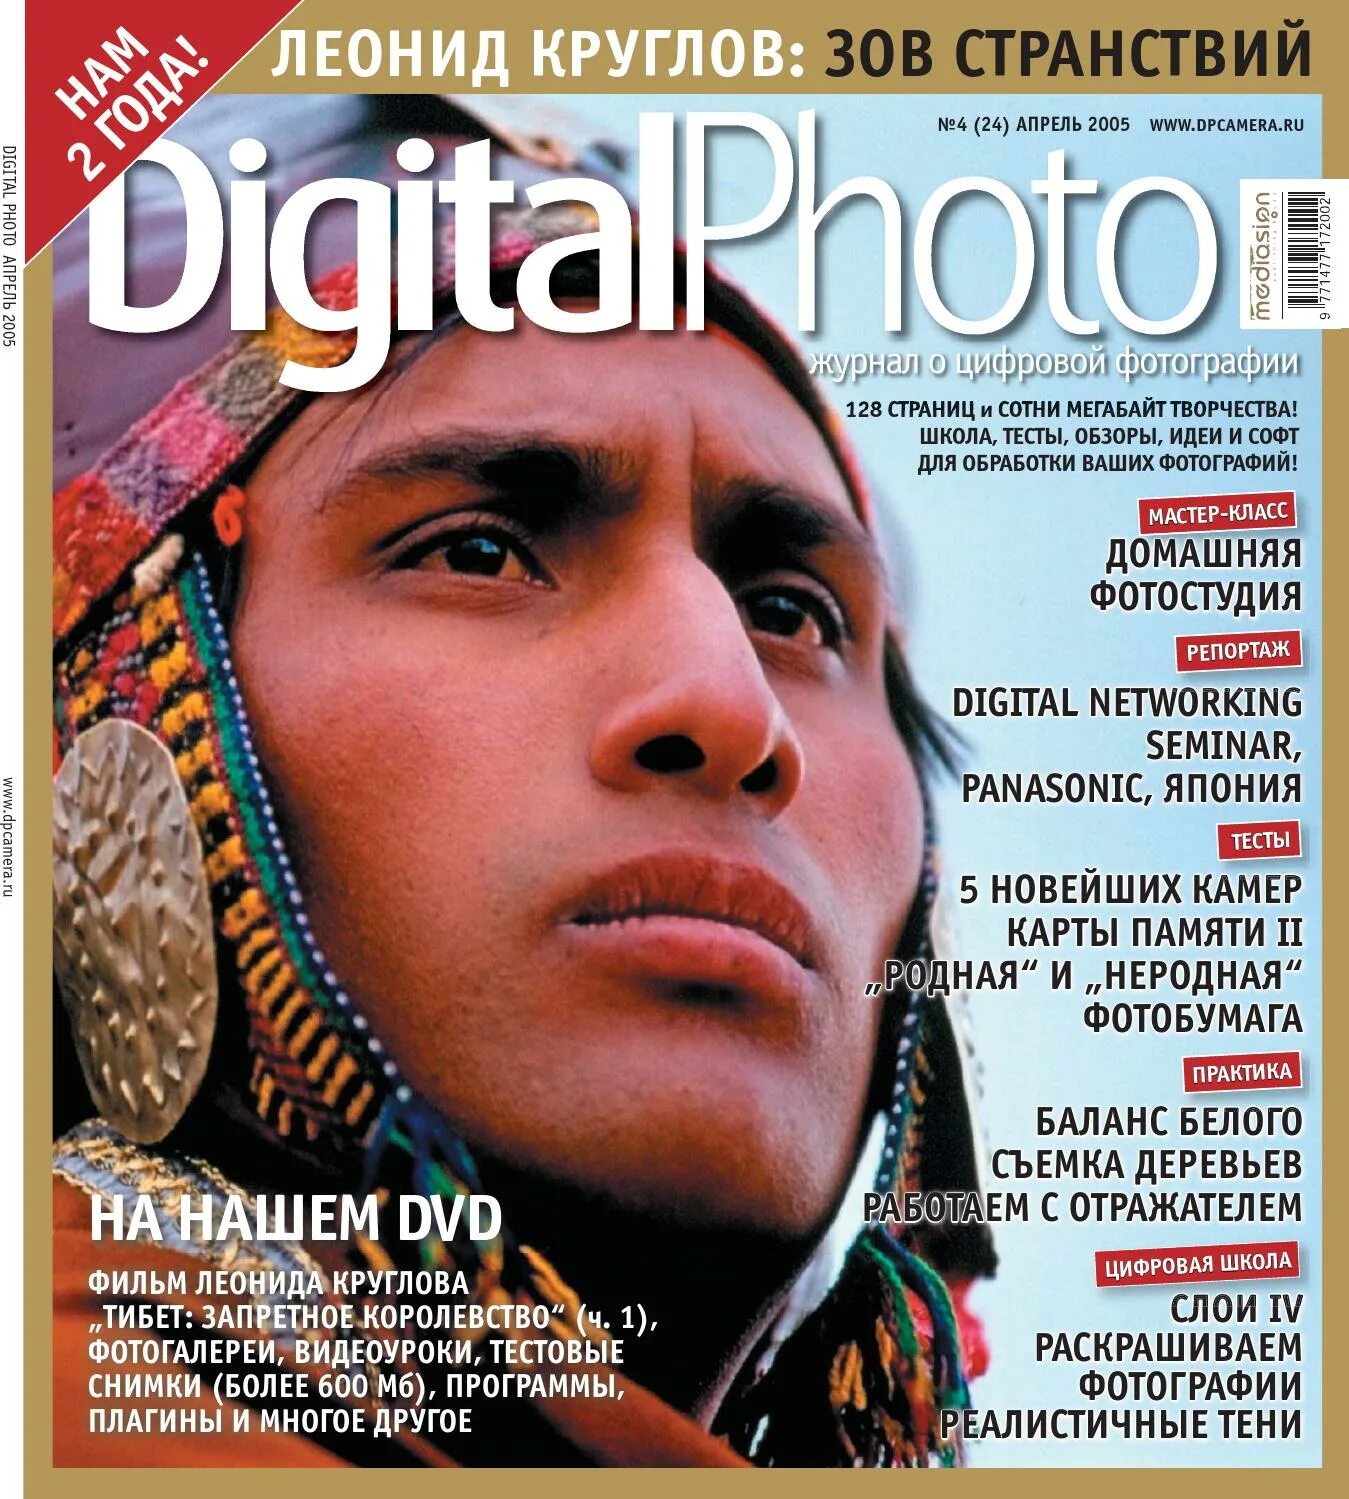 Журналы 2005. Журнал Digital. Диджитал фото журнал. Цифровой журнал.